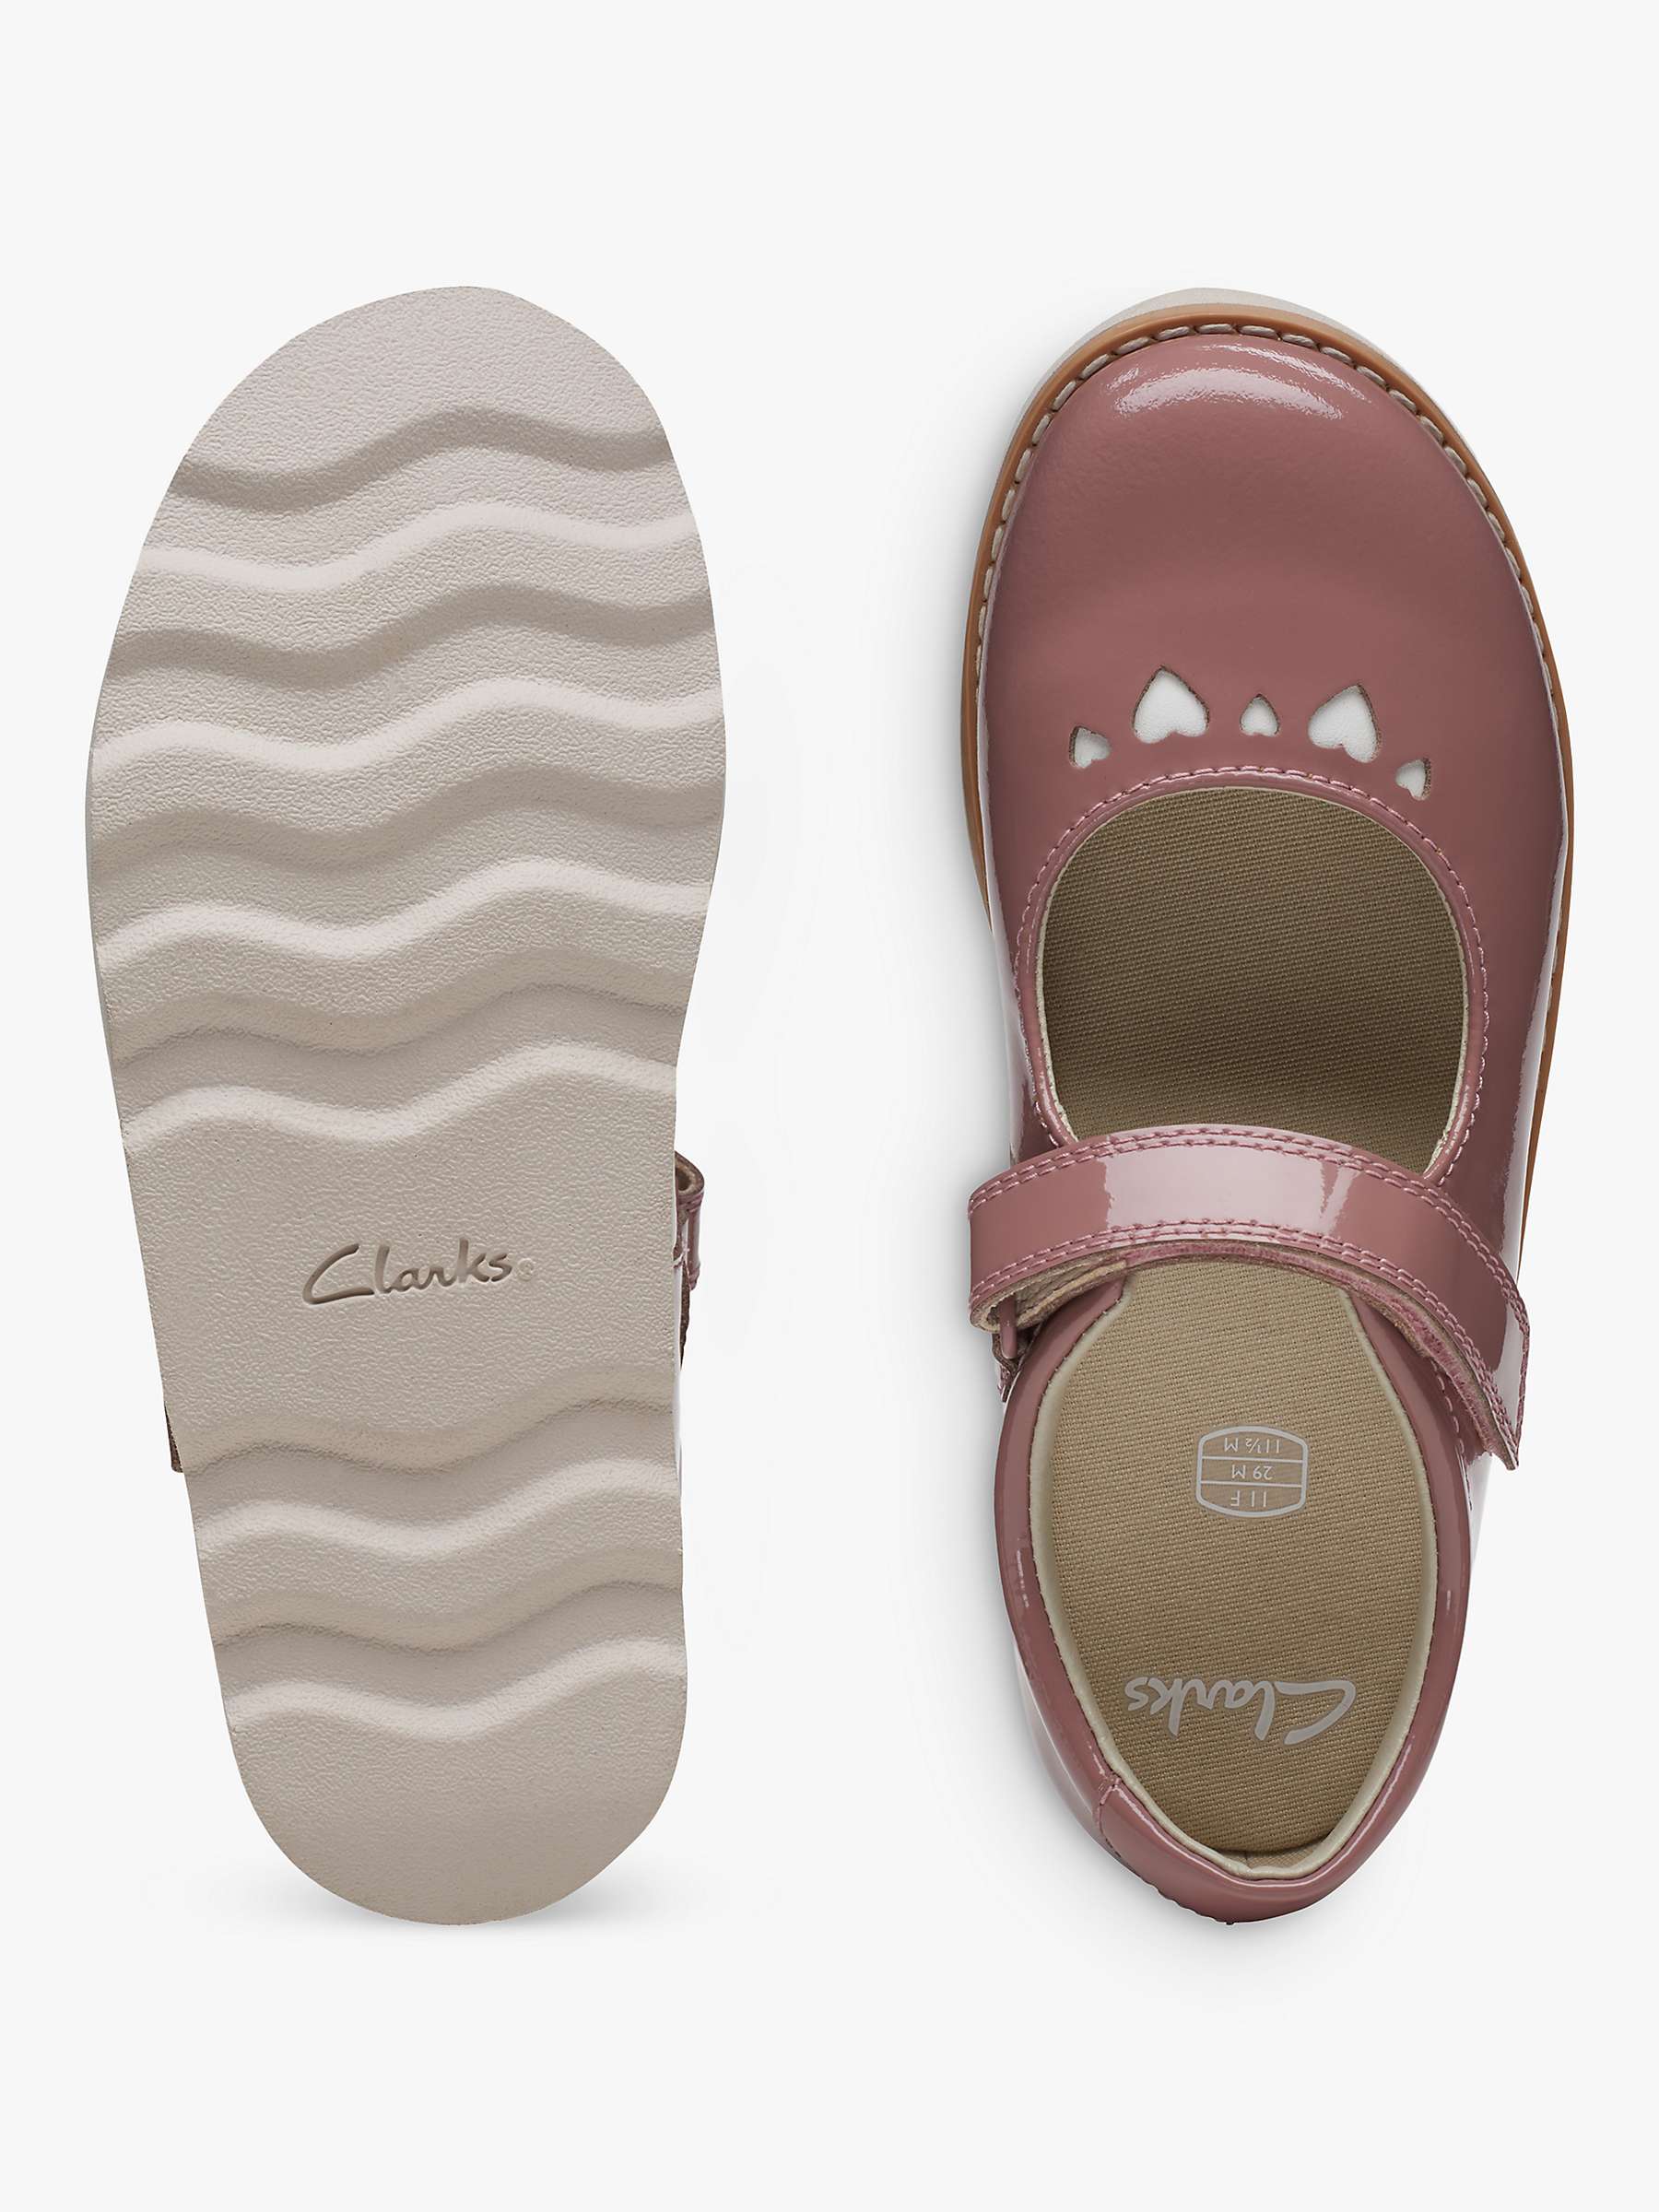 Buy Clarks Kids' Crown Jane Leather Shoes Online at johnlewis.com